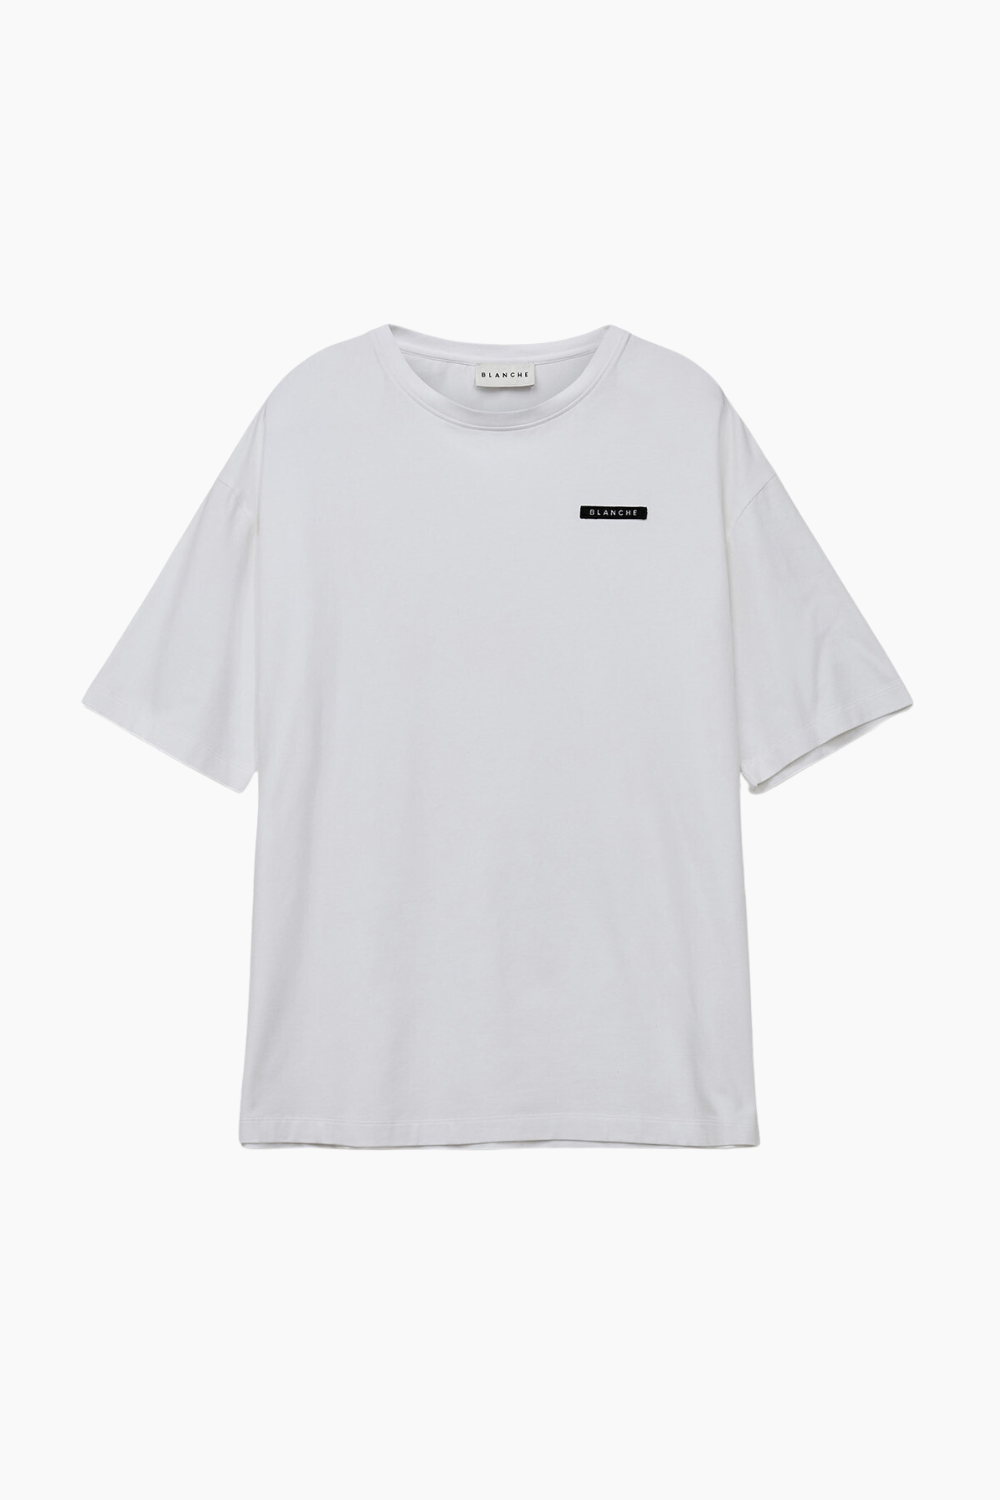 Alber-BL T-shirt SSL - White - Blanche - Hvid M